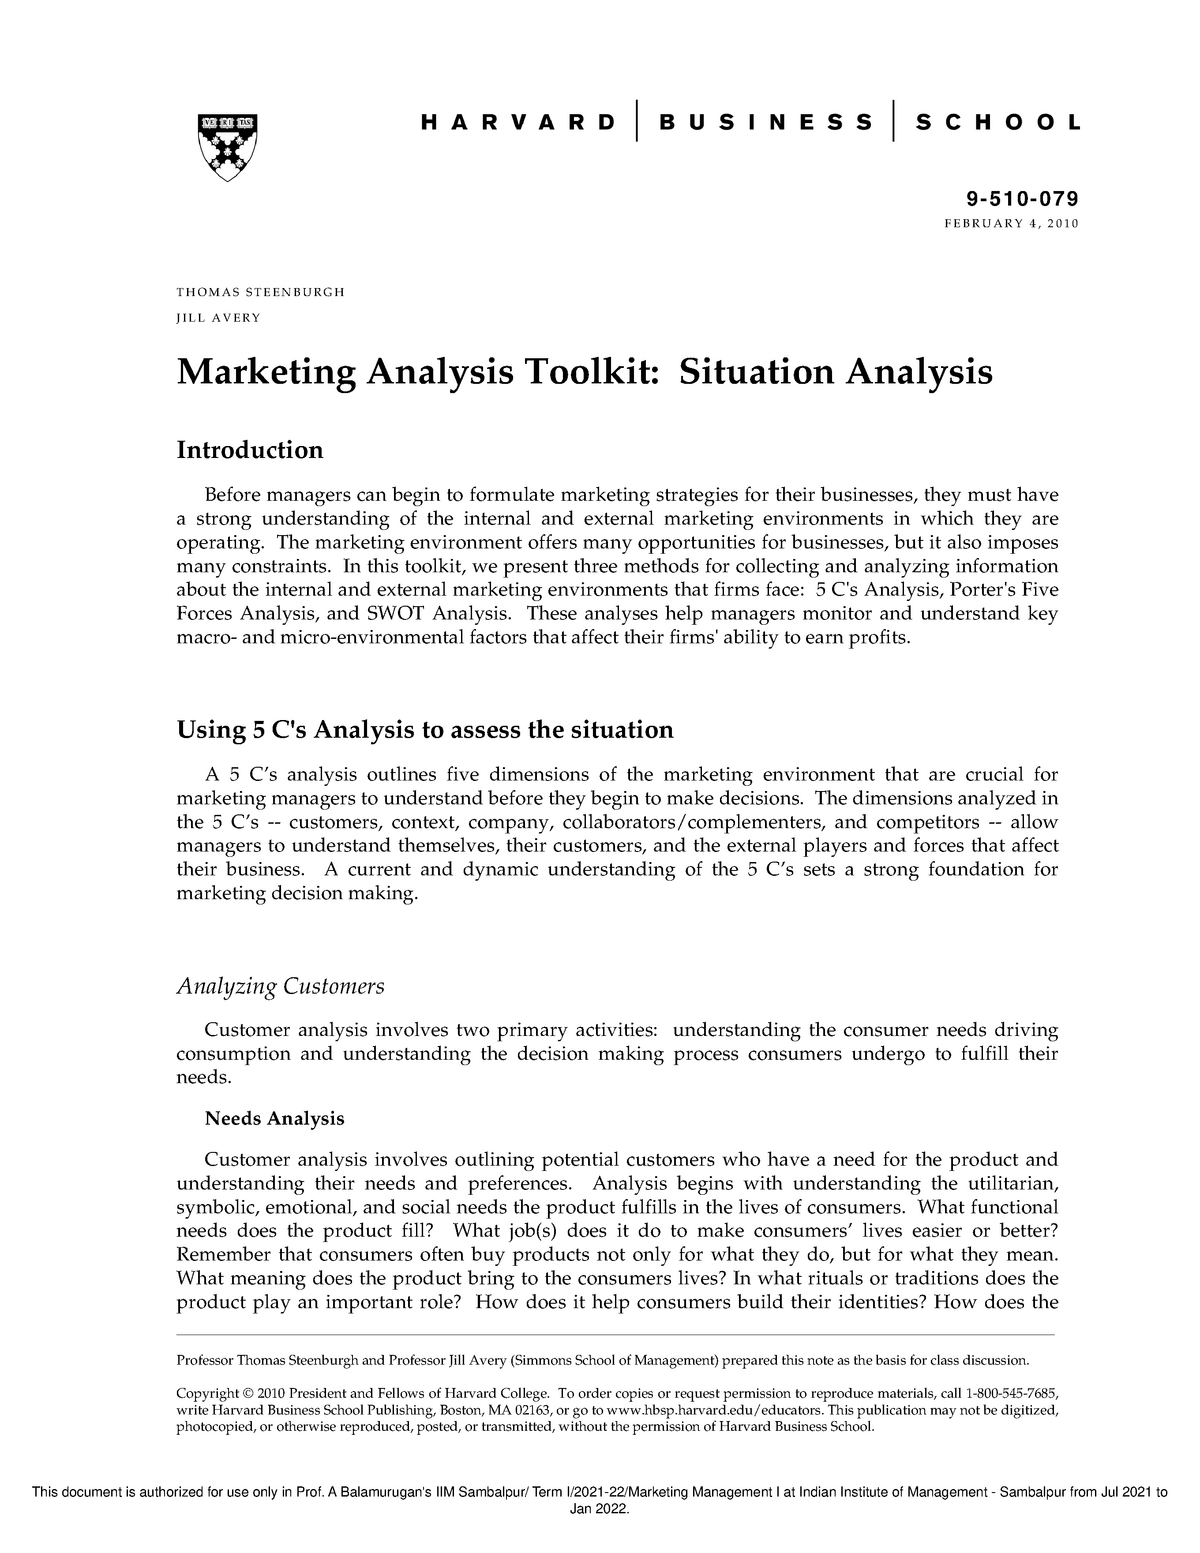 dissertation project on marketing pdf